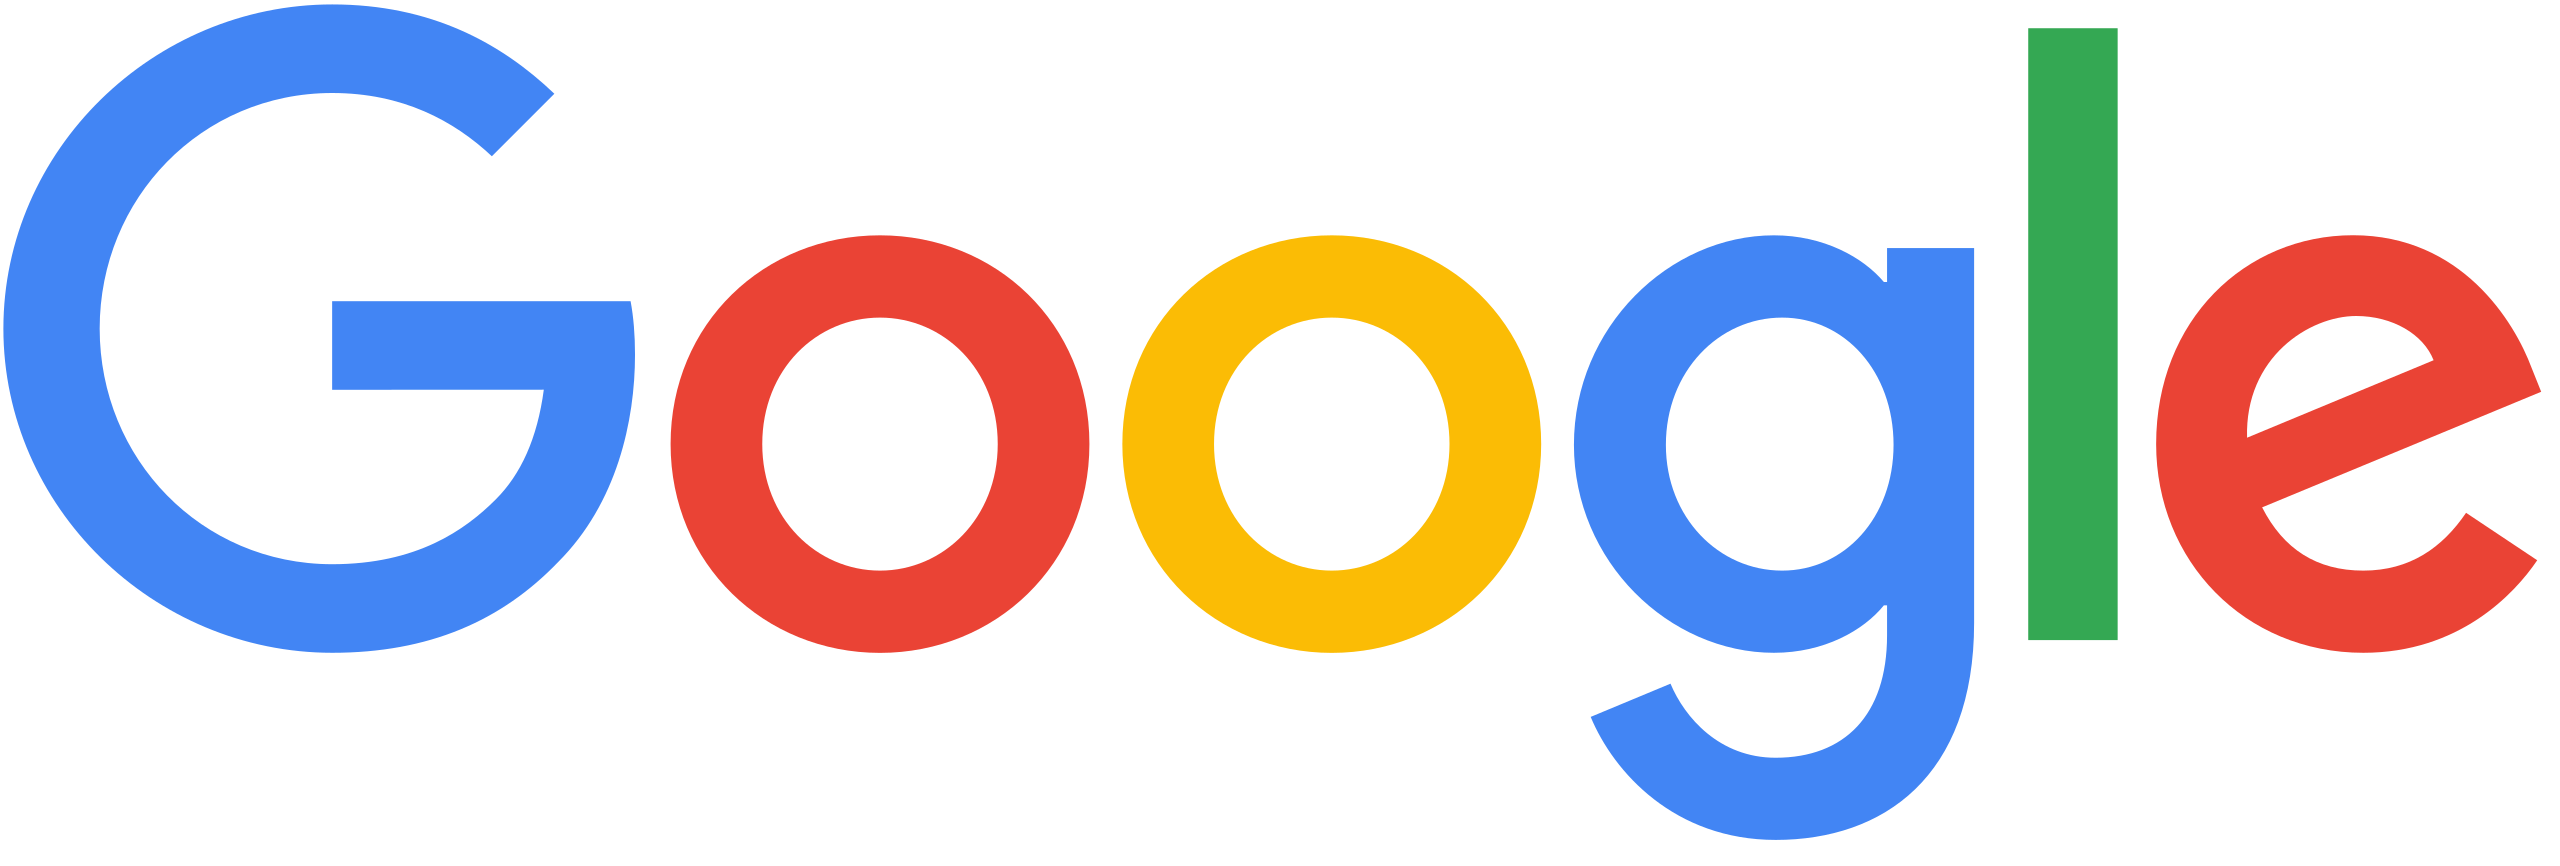 Google 2015 logo.svg